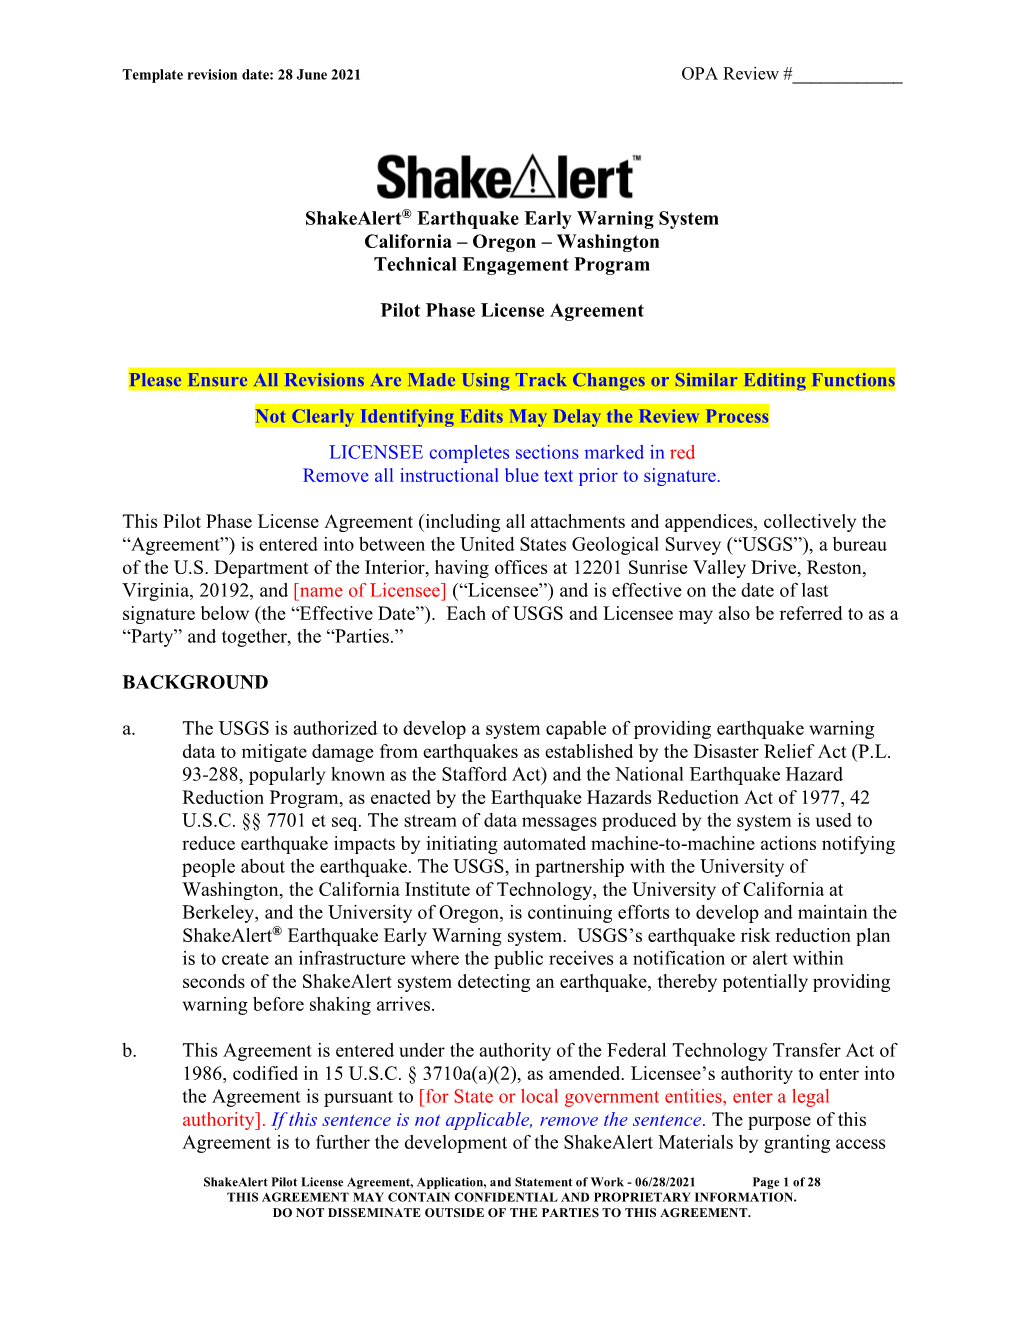 Shakealert® Earthquake Early Warning System California – Oregon – Washington Technical Engagement Program Pilot Phase Licen